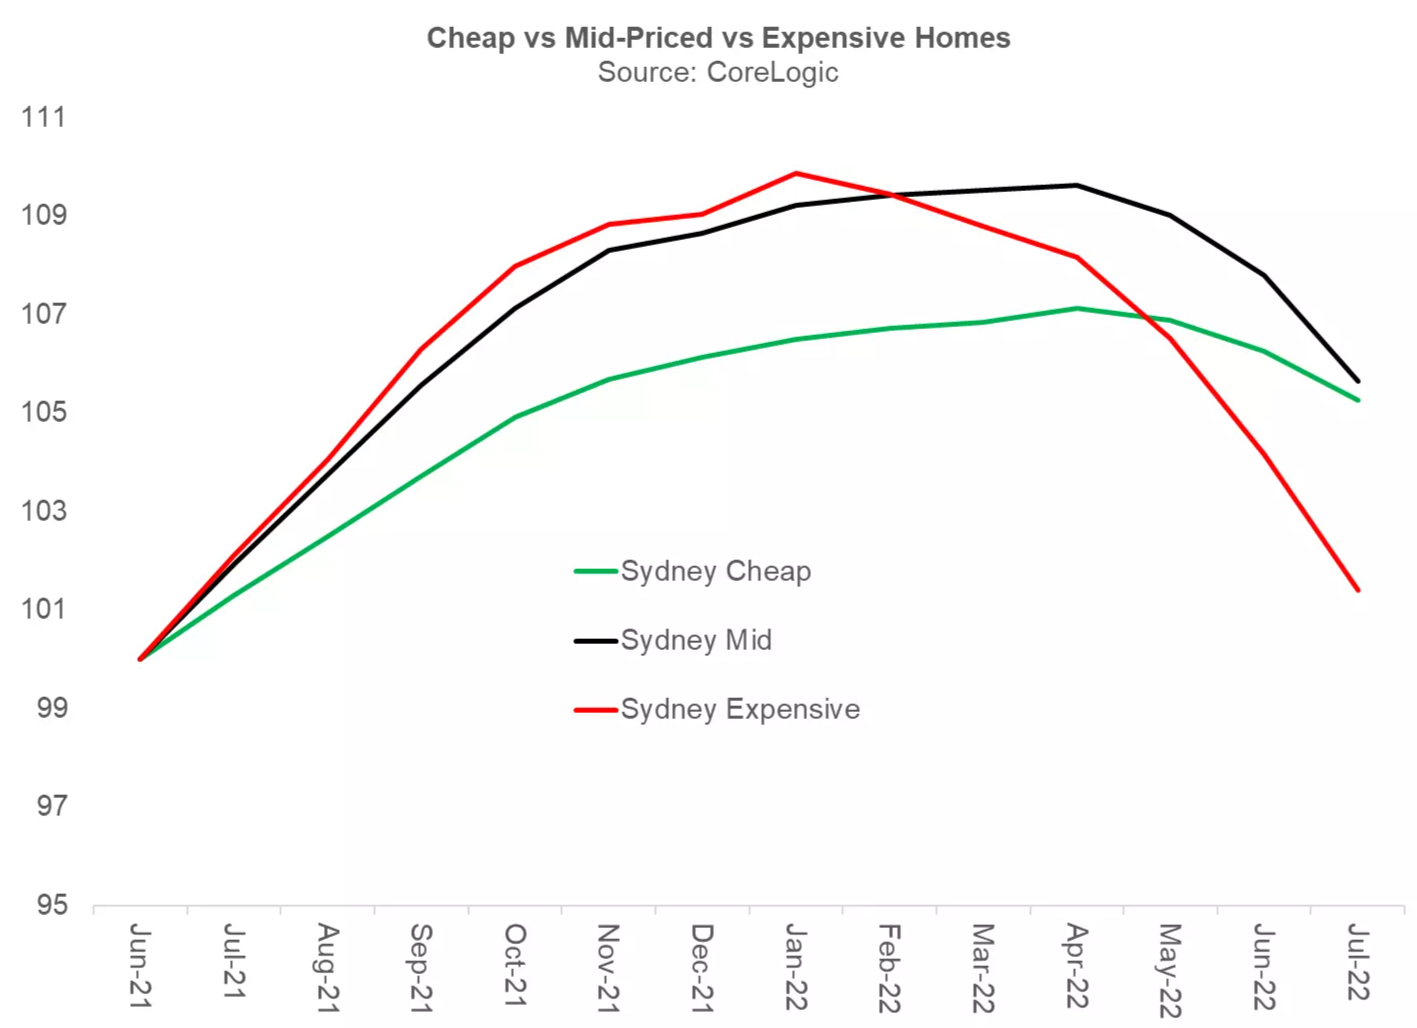 Sydney price falls by segments